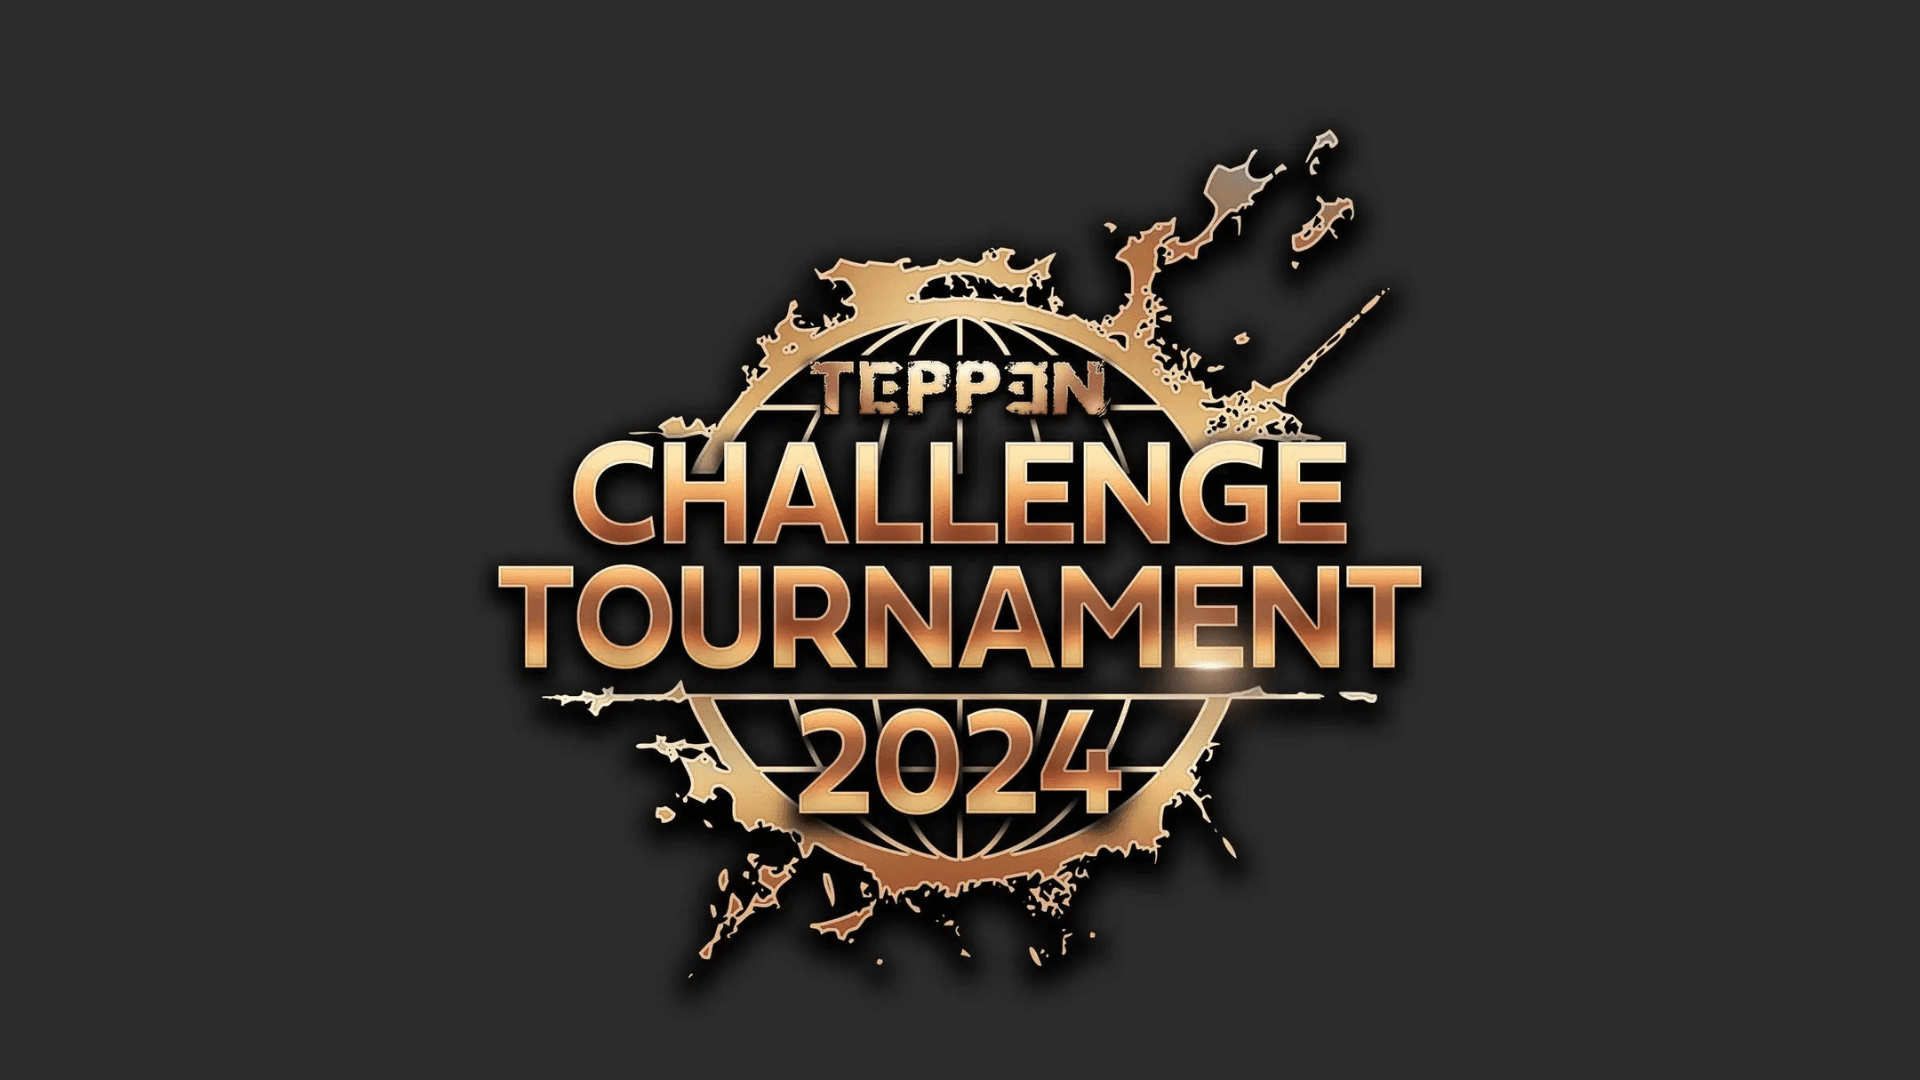 TEPPEN CHALLENGE TOURNAMENT 2024 feature image